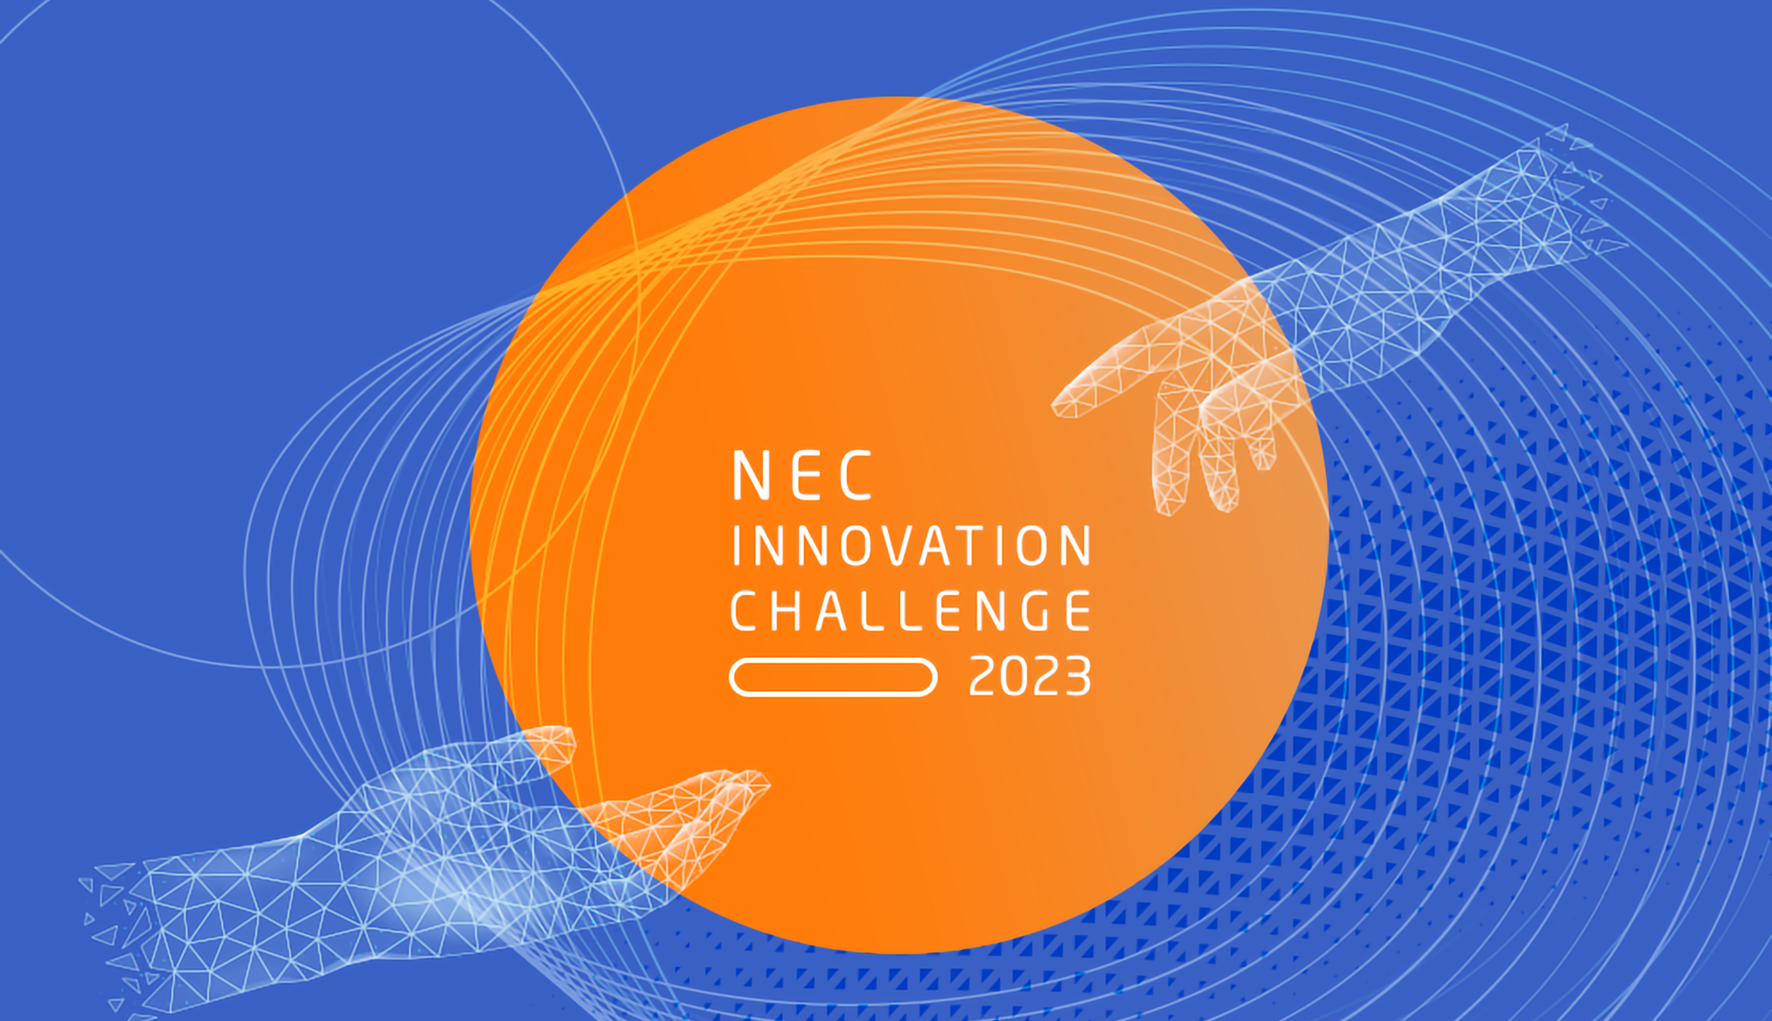 NECÂO[orWlXReXguNEC Innovation Challenge 2023ṽt@CiCxg{ARey AssuranceiChlVAjNEC܂